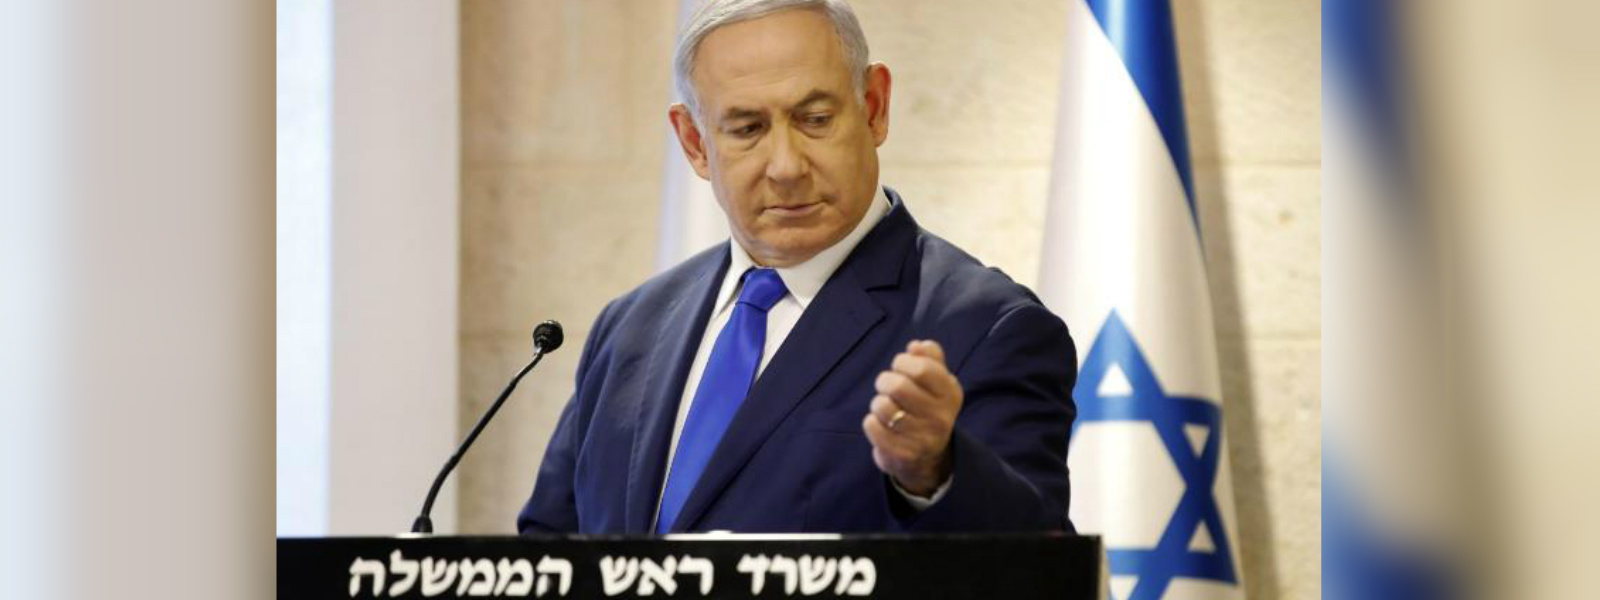 Netanyahu makes no victory claim post-election